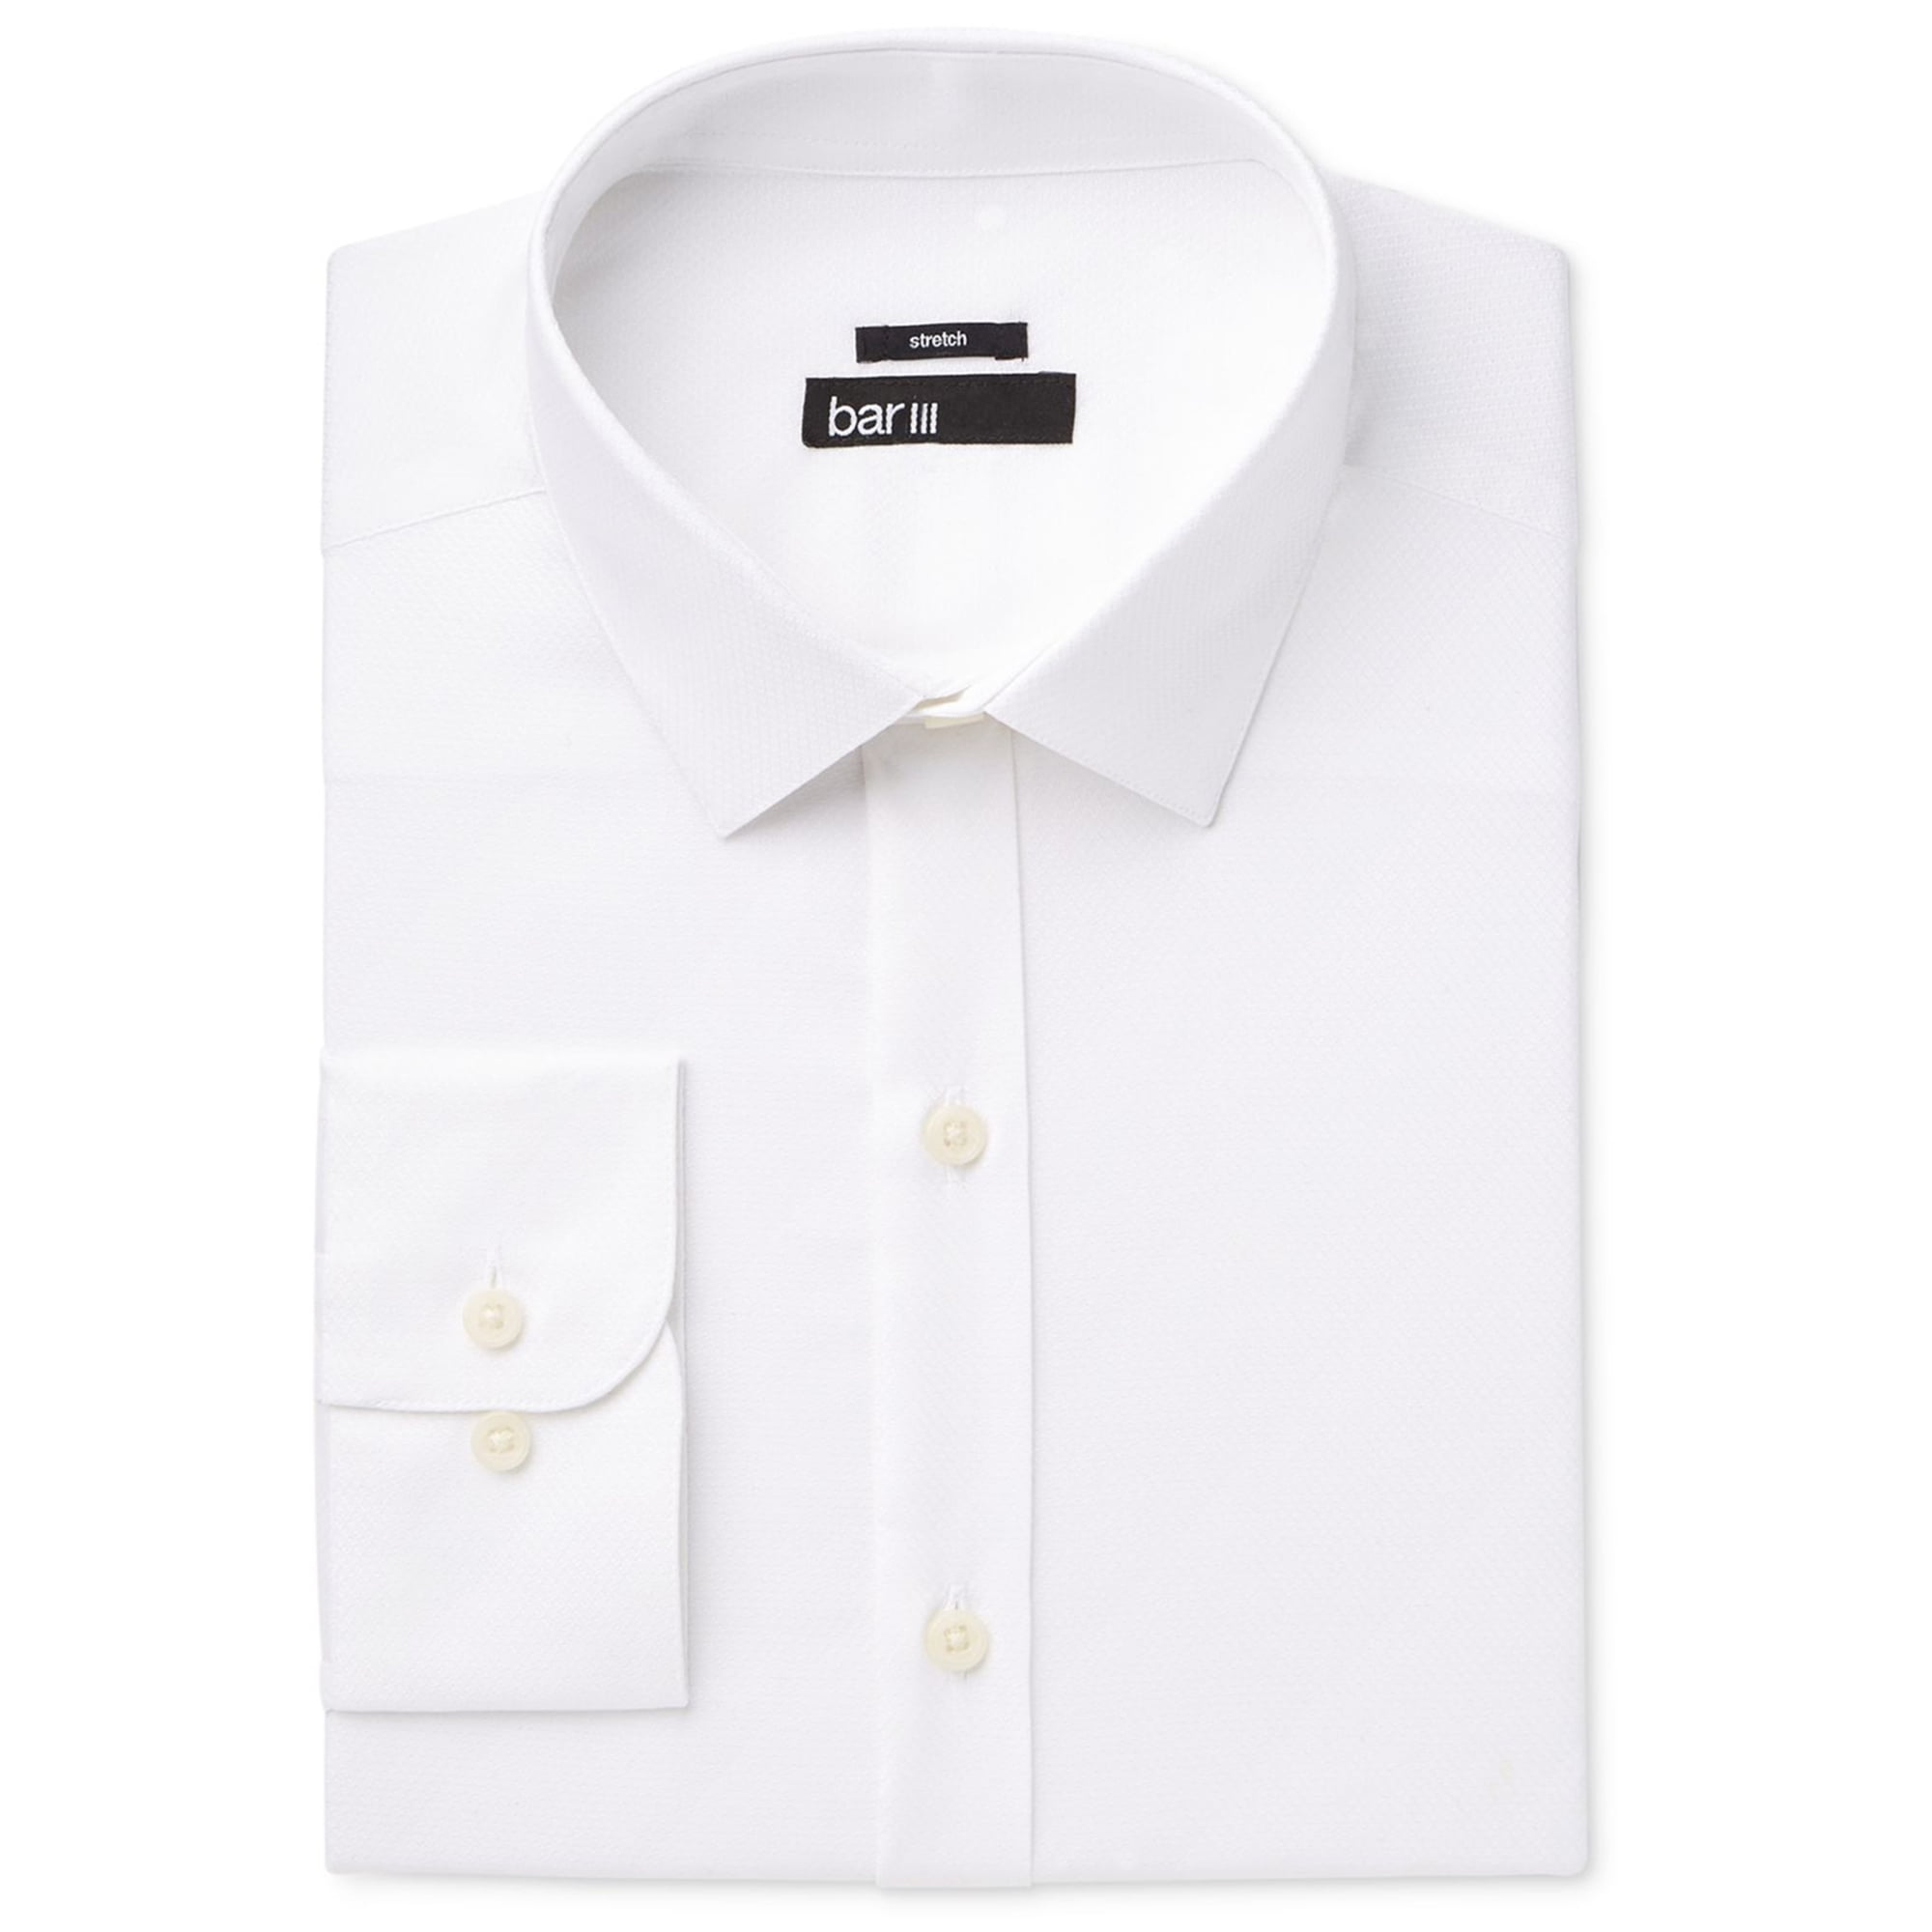 $119 Bar Iii 16-16.5 34/35 Mens Slim-Fit Stretch Black White Button Dress Shirt